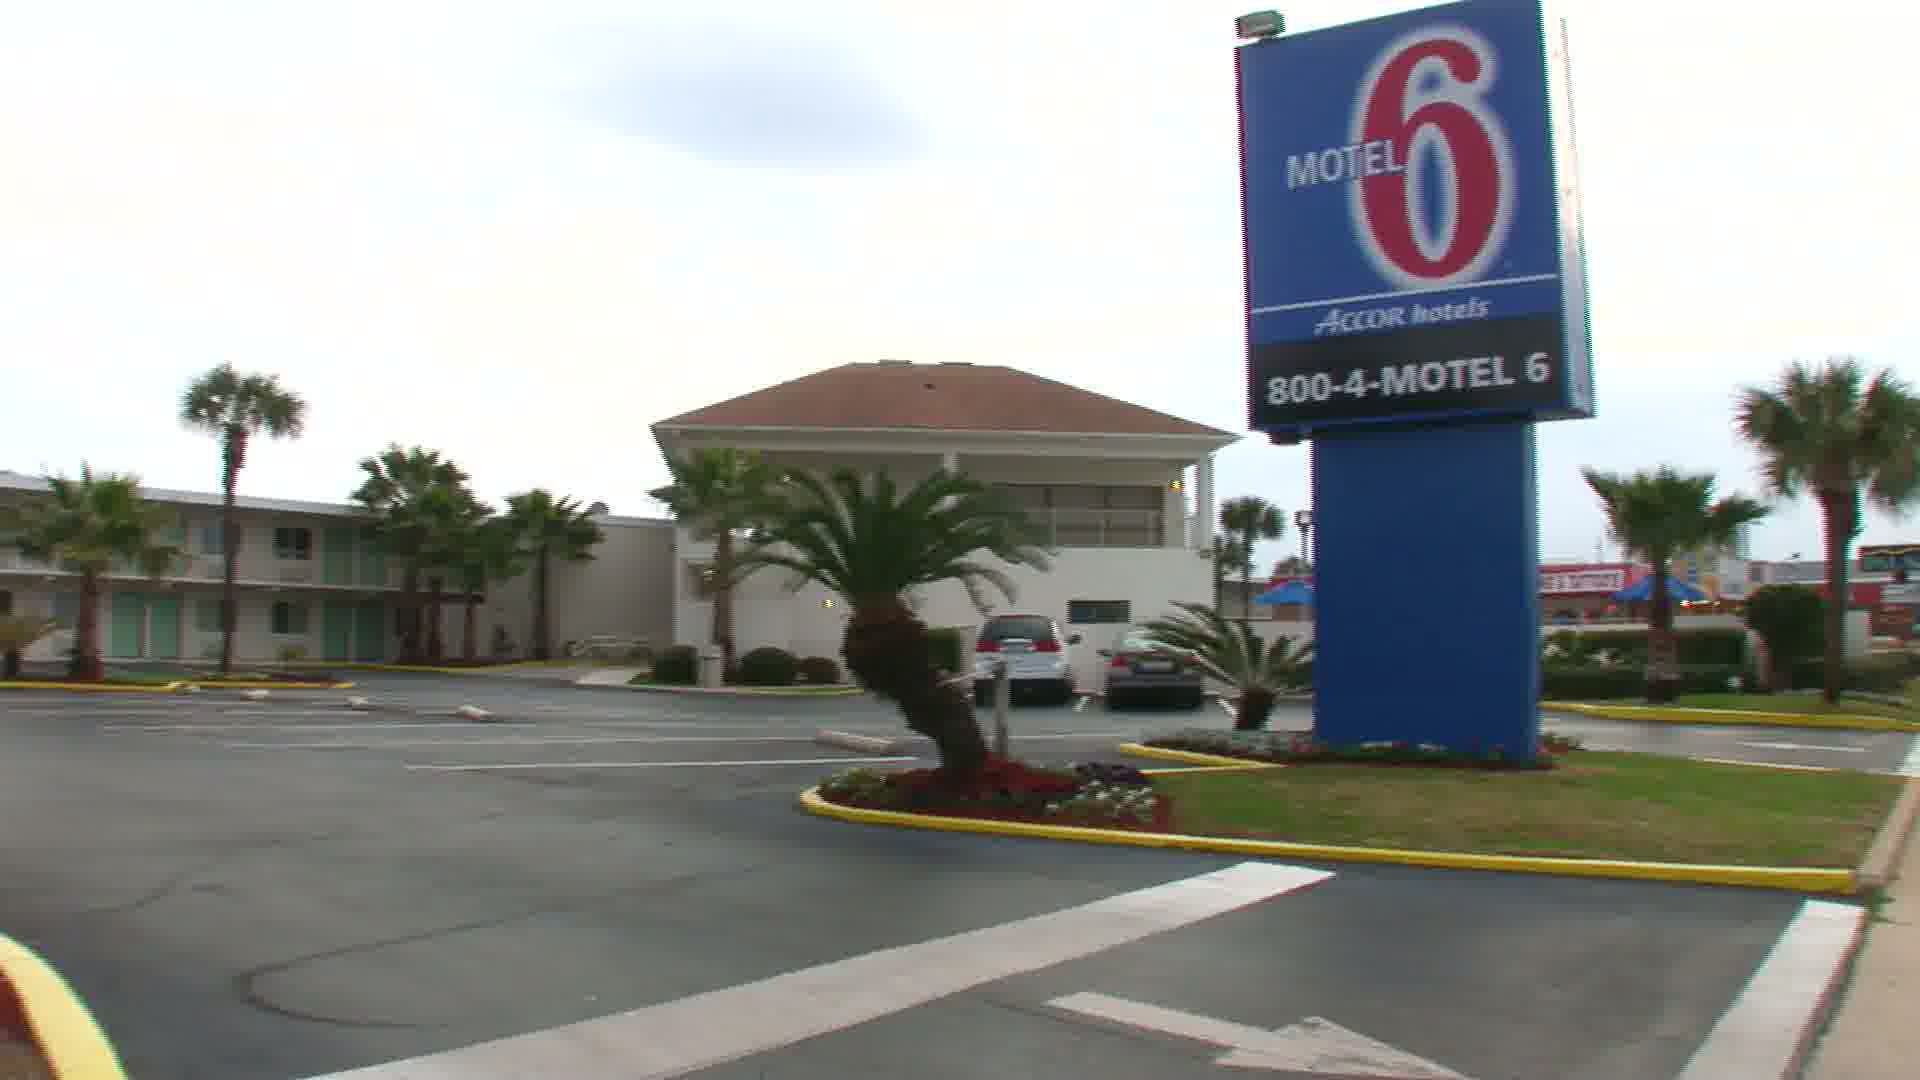 Motels in Destin Florida Destin Florida AttractionsDestin Florida